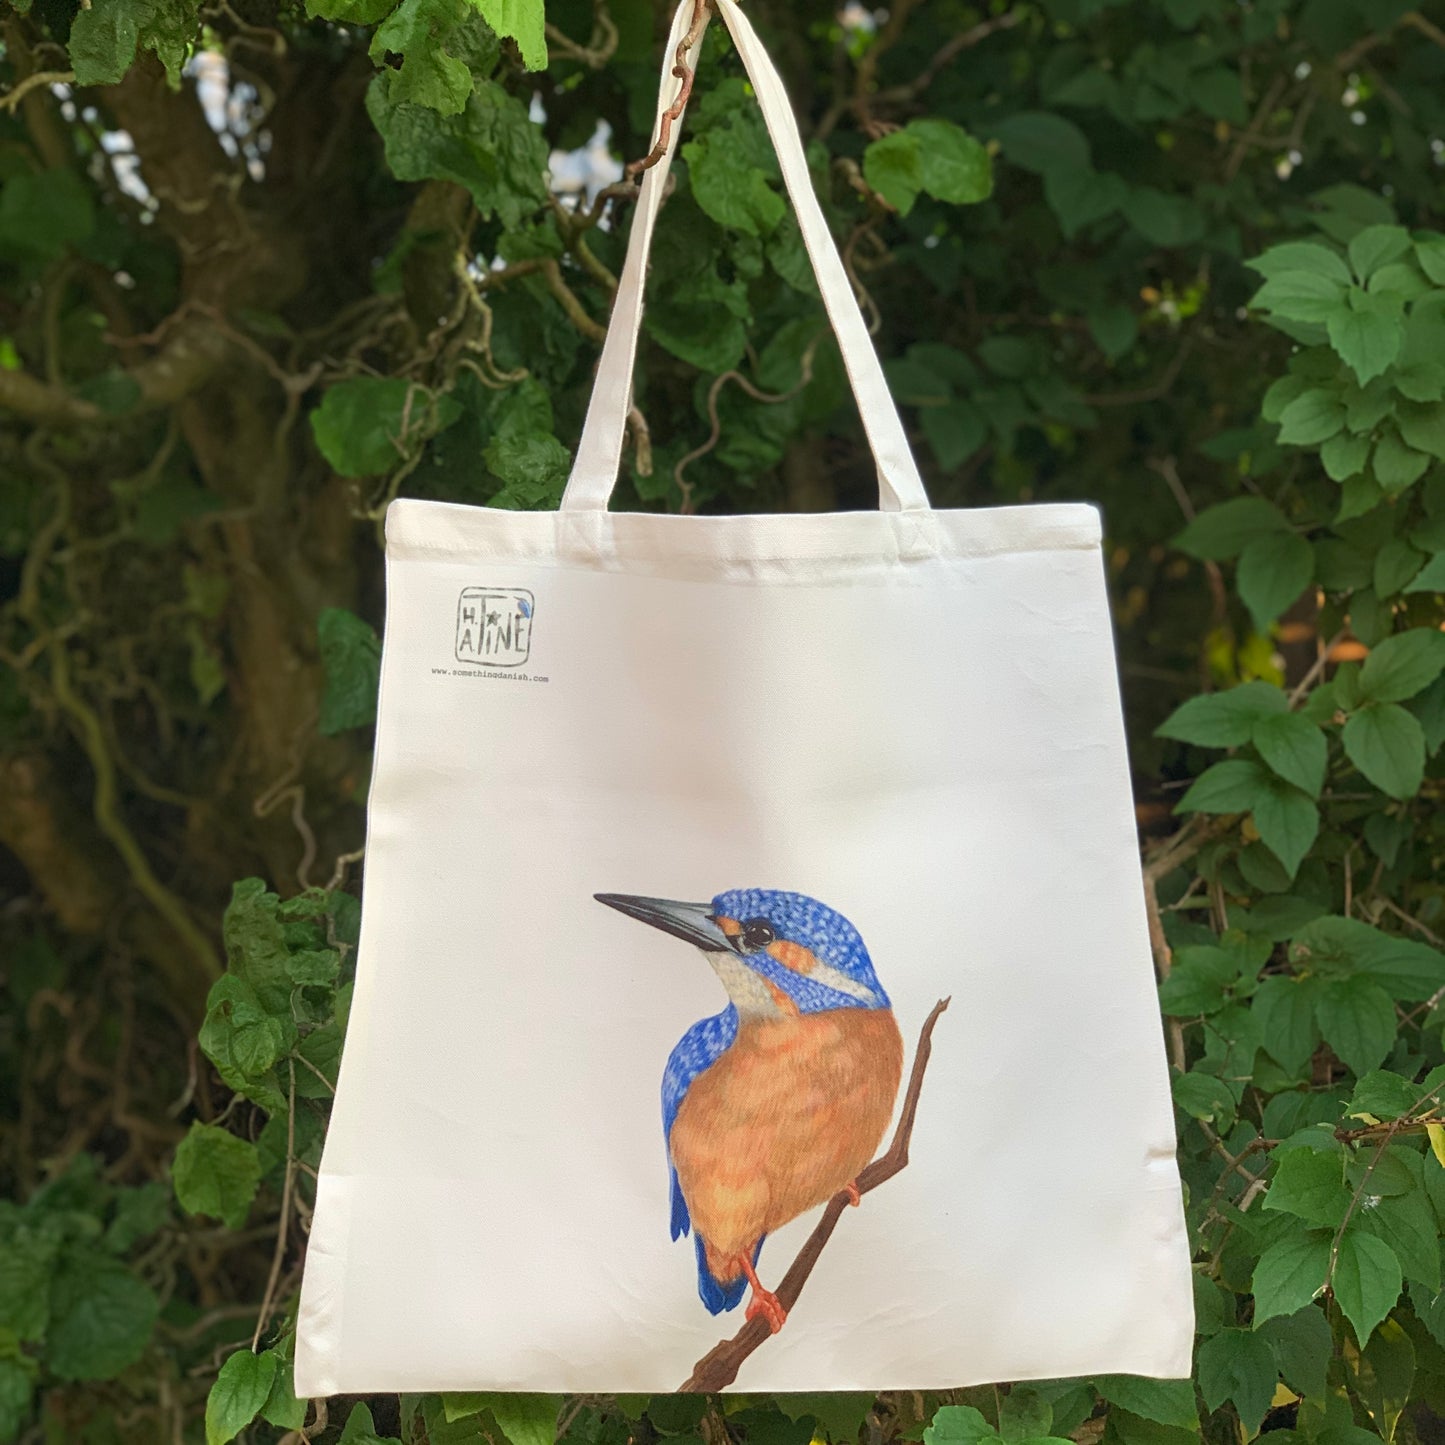 Isfugl net // Kingfisher tote bag